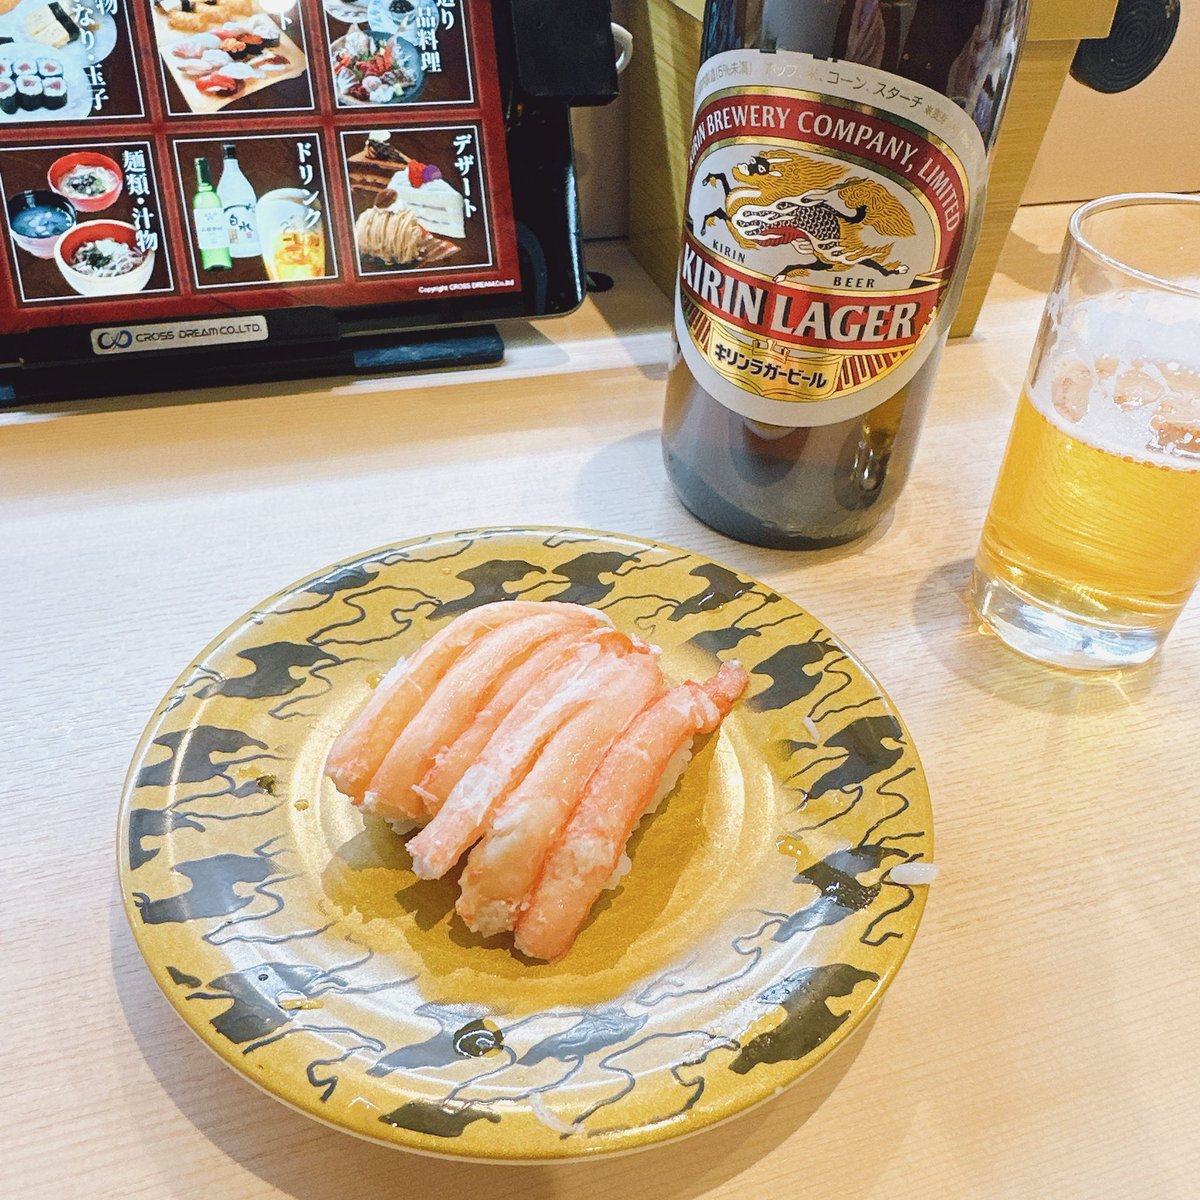 test ツイッターメディア - 本日は朝からビール🍺&日本酒🍶&寿司でした🍣
#Beer #日本橋 #寿司 https://t.co/GujWQAsAvQ